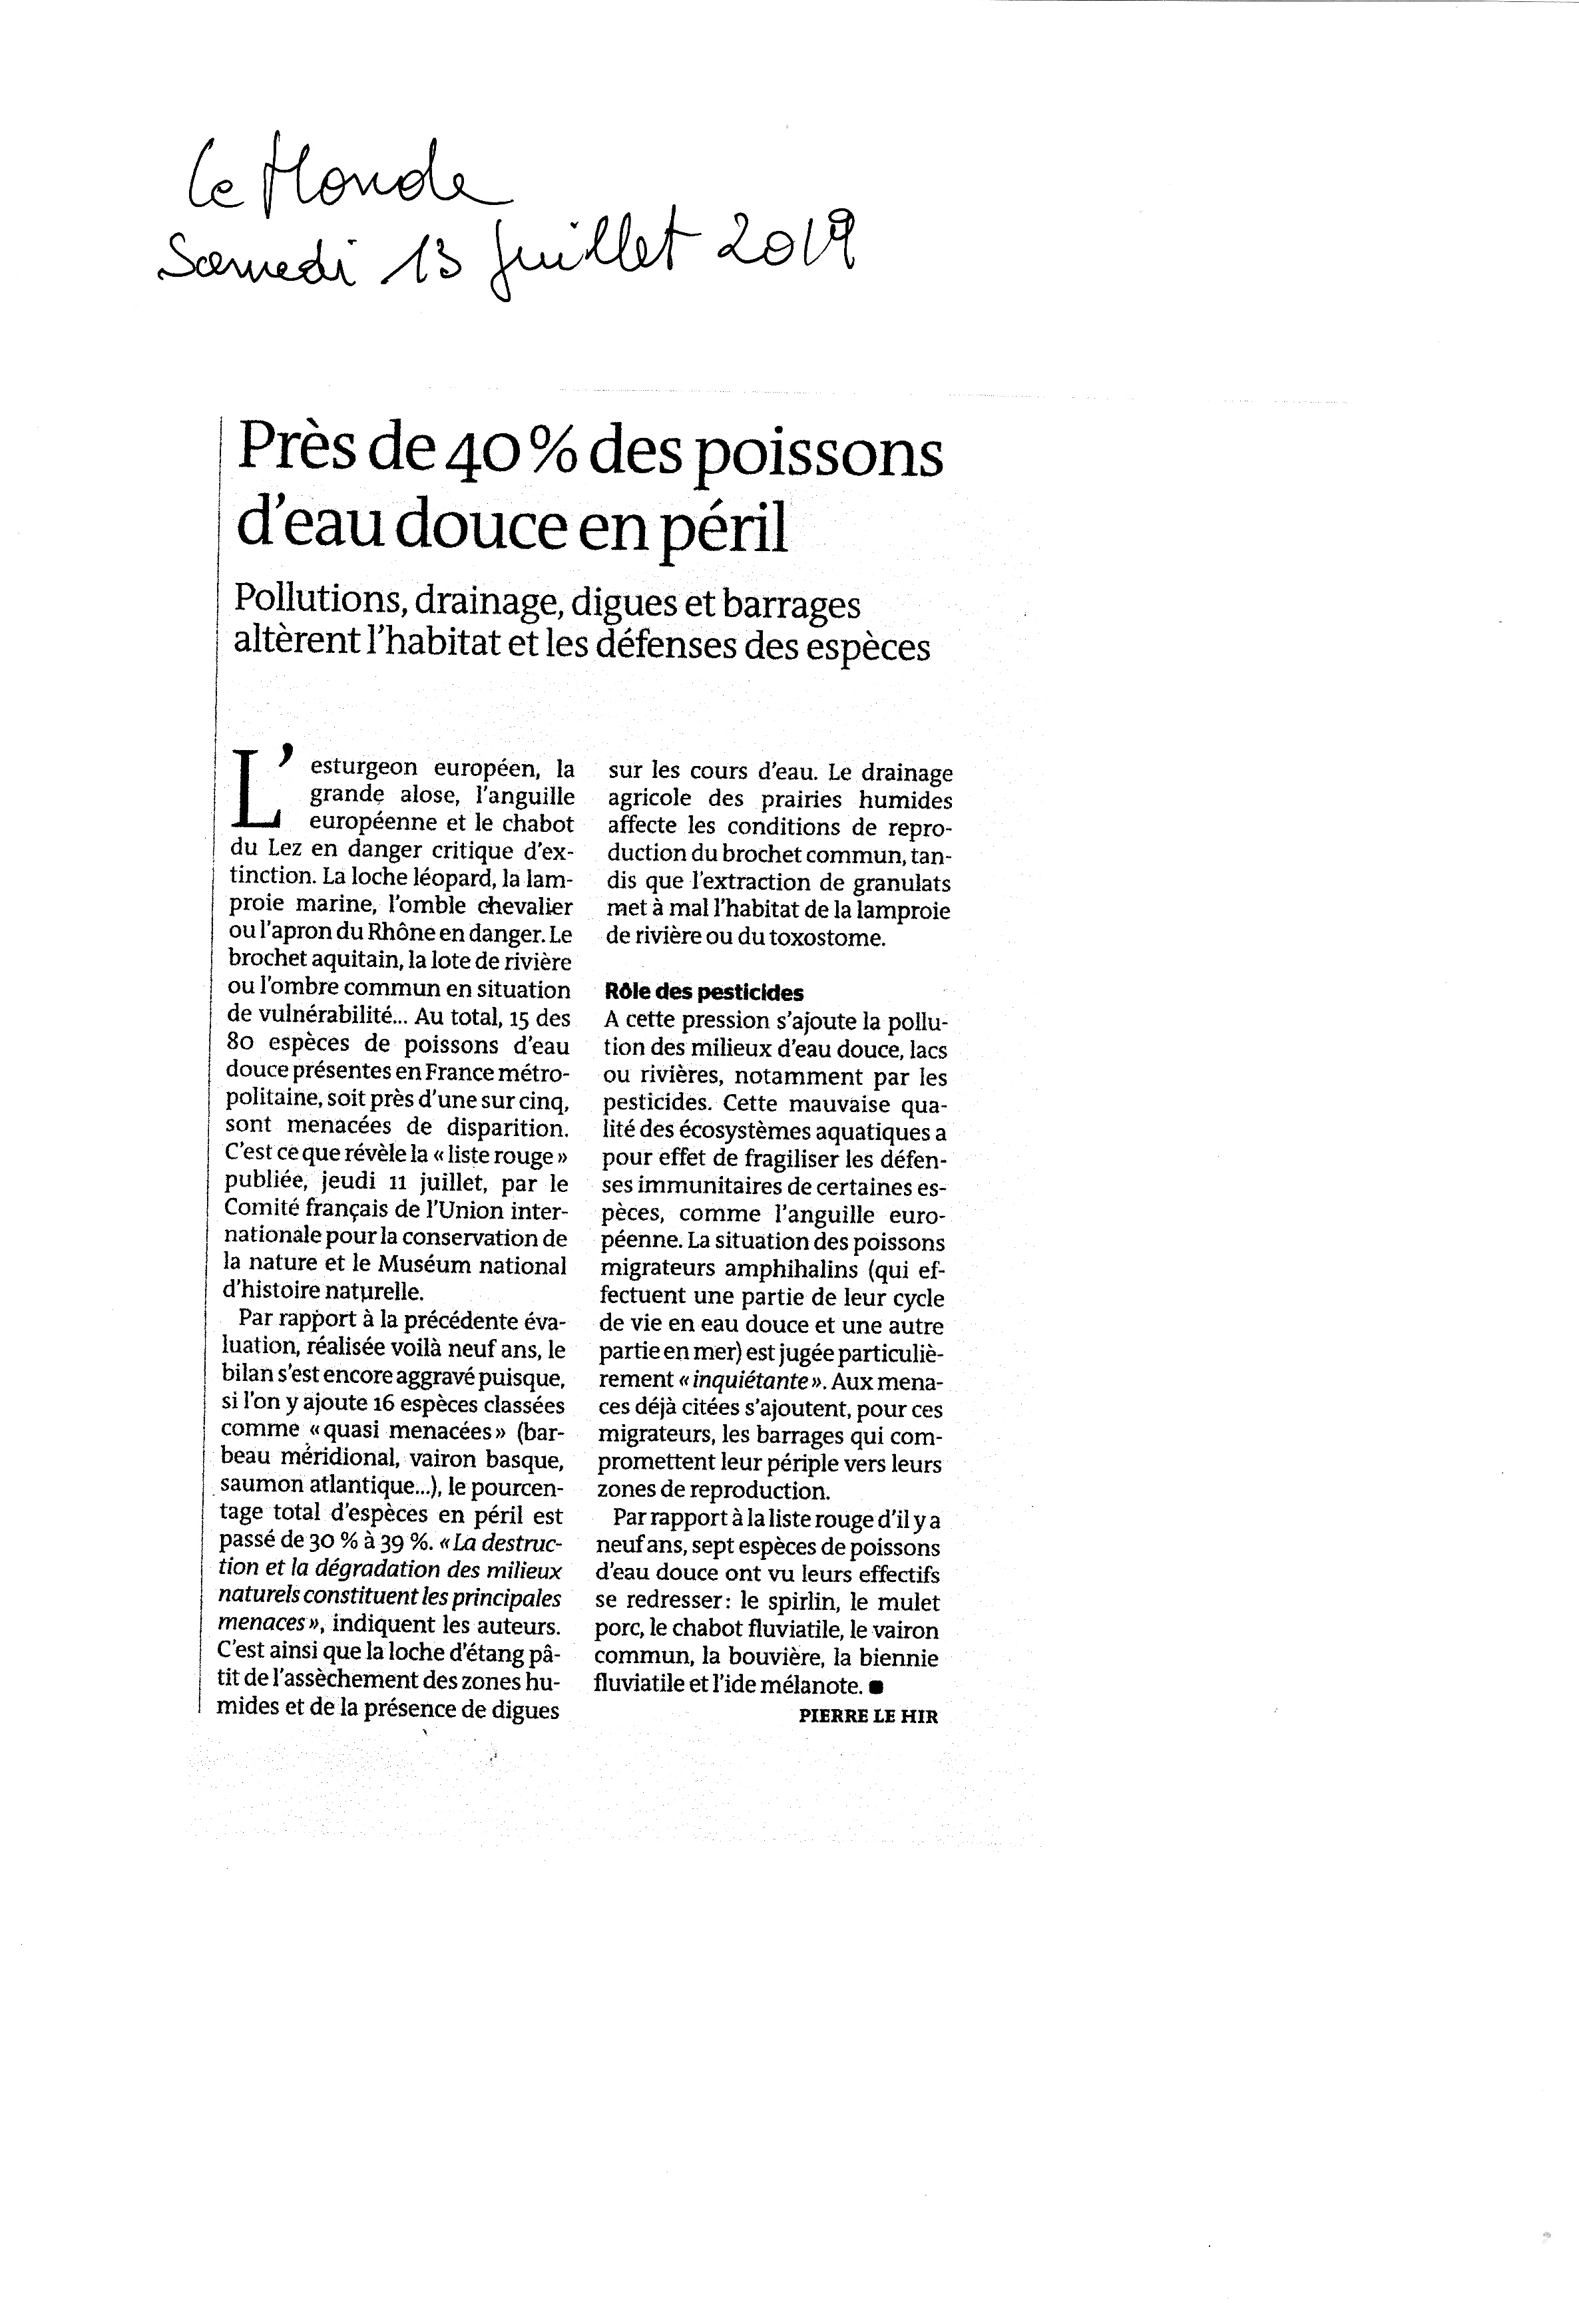 UICN Le Monde -.